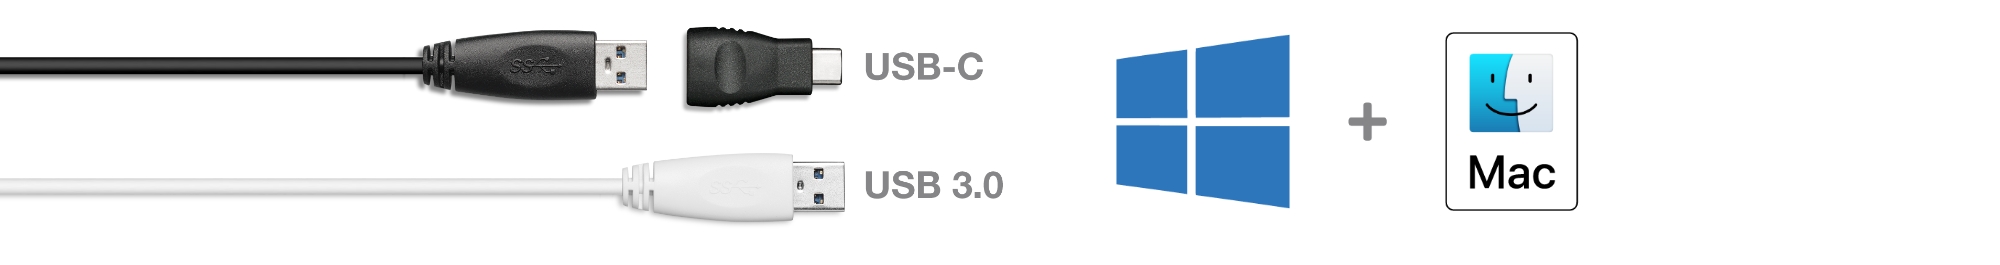 USB 3 &C desk